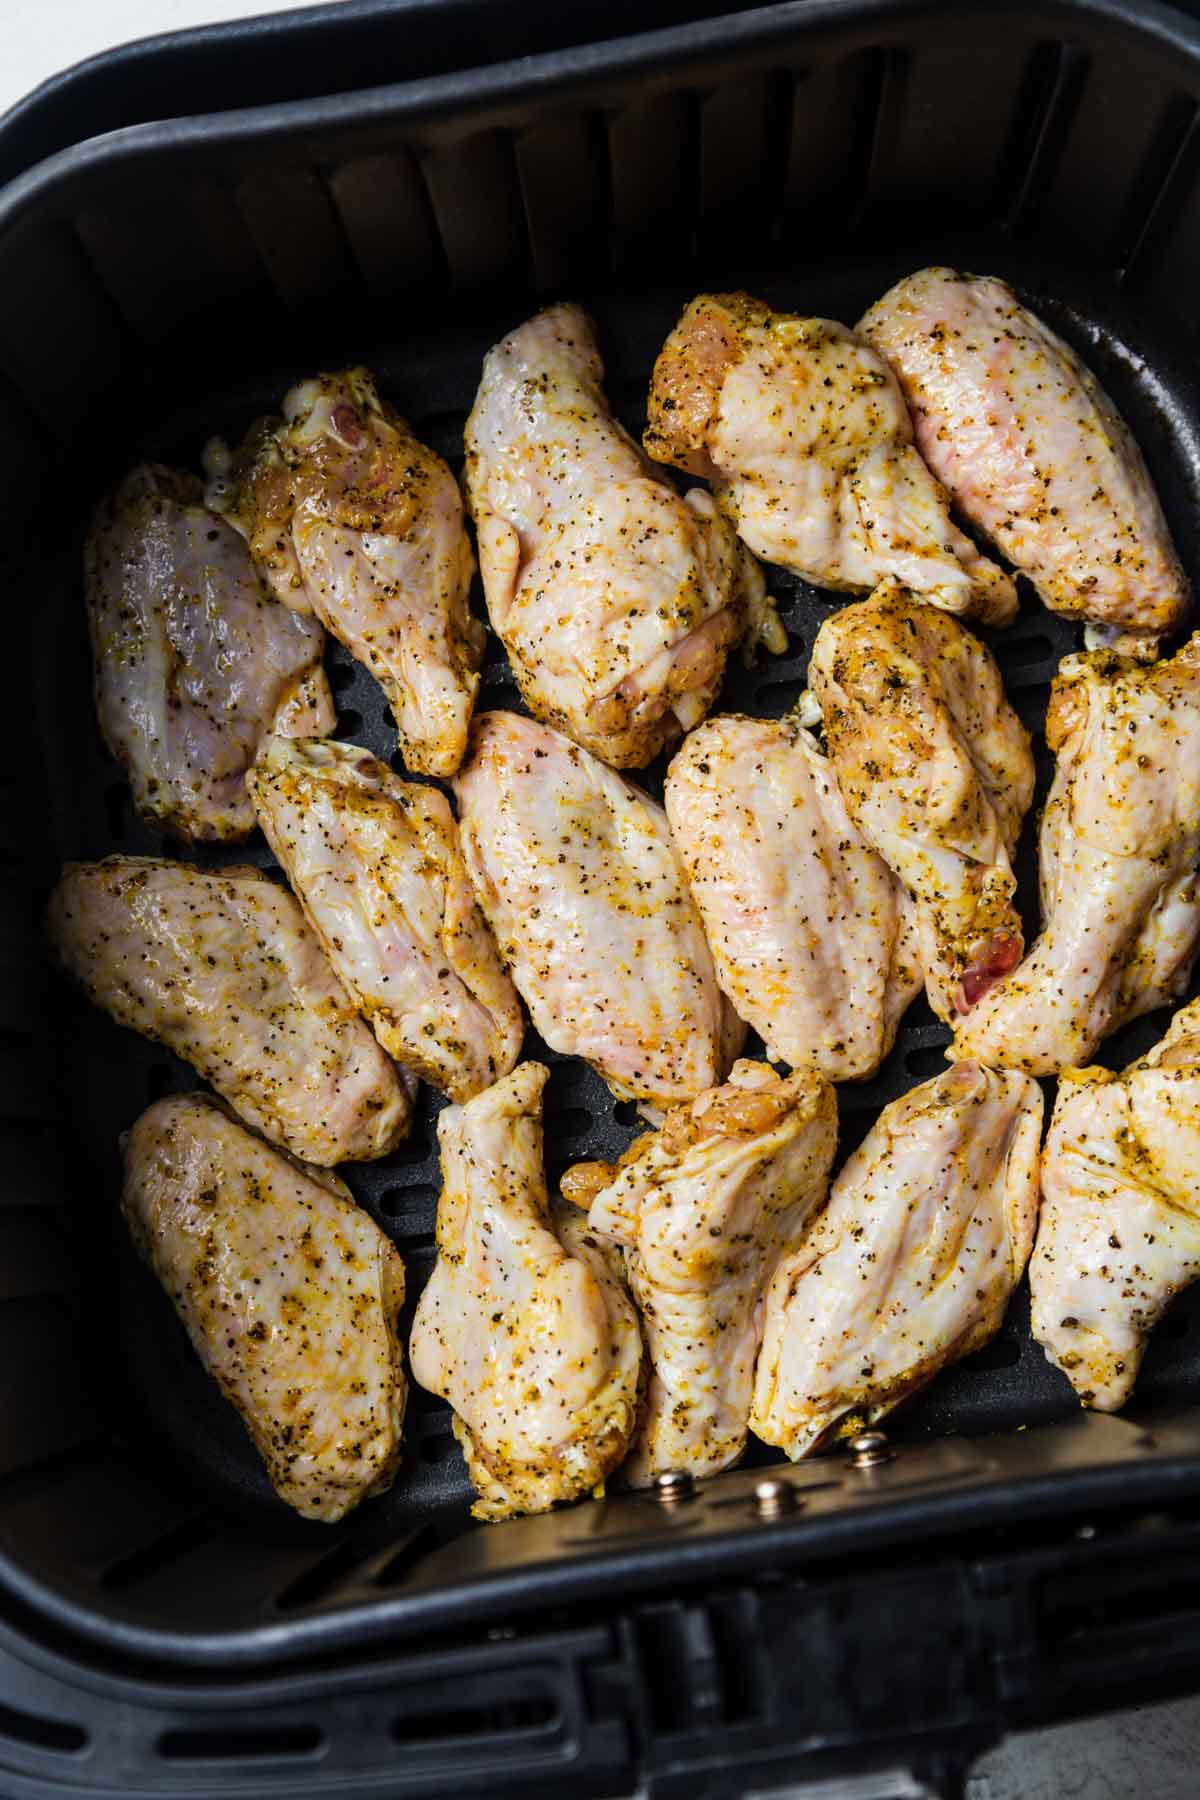 chicken wings in the air fryer basket.